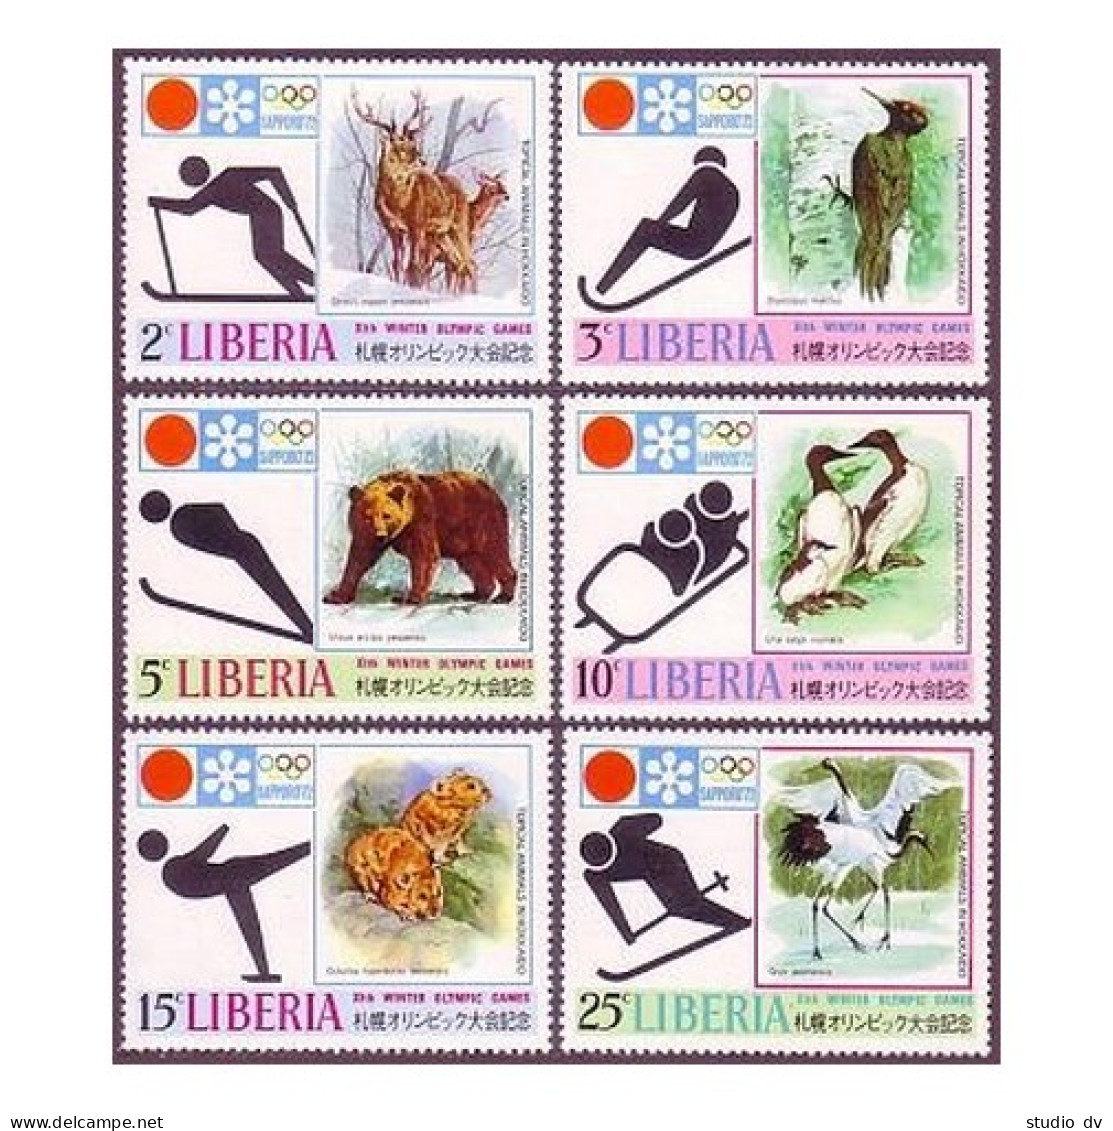 Liberia 577-582, MNH. Michel 810-815. Olympics Sapporo-1972. Animals, Birds. - Liberia